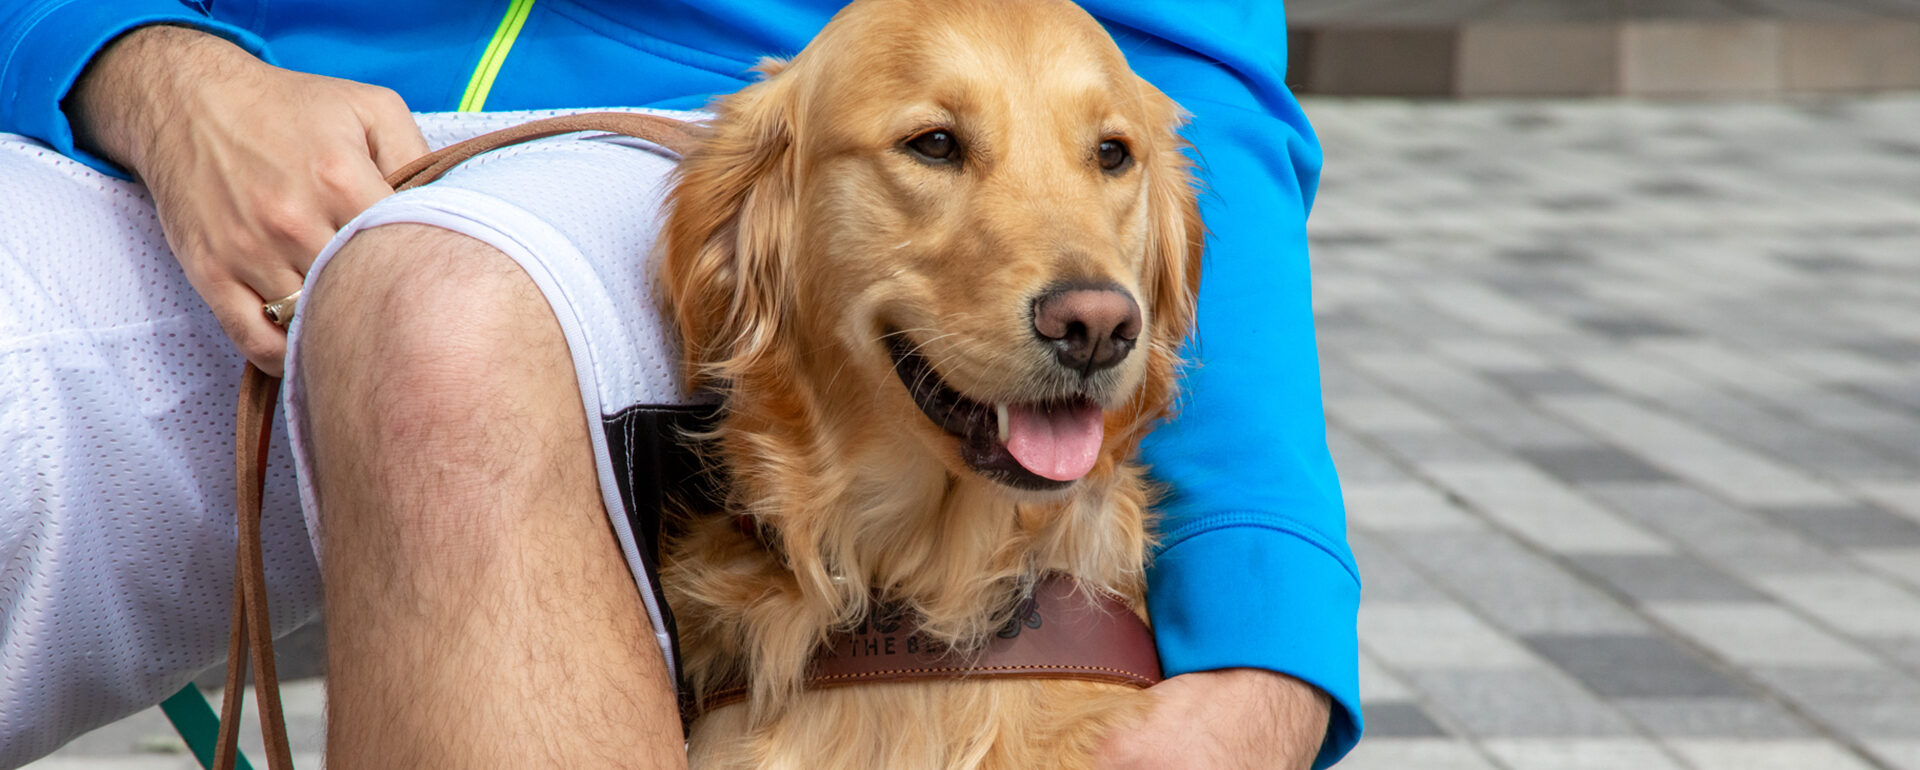 A smiling Golden Retriever guide dog sits next to a person.